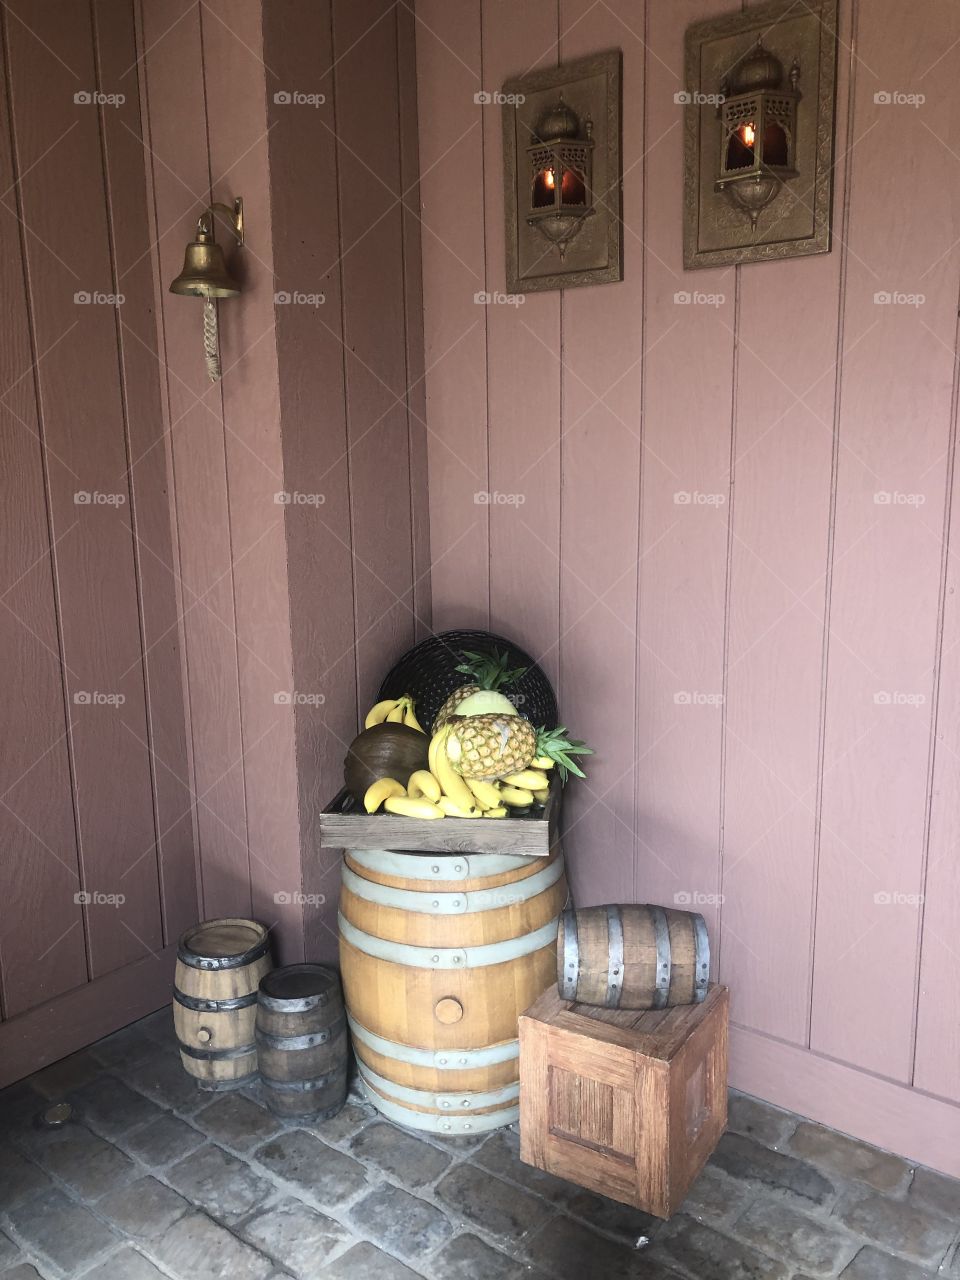 Fake fruit display at Disneyland. Disney Magic is everywhere.